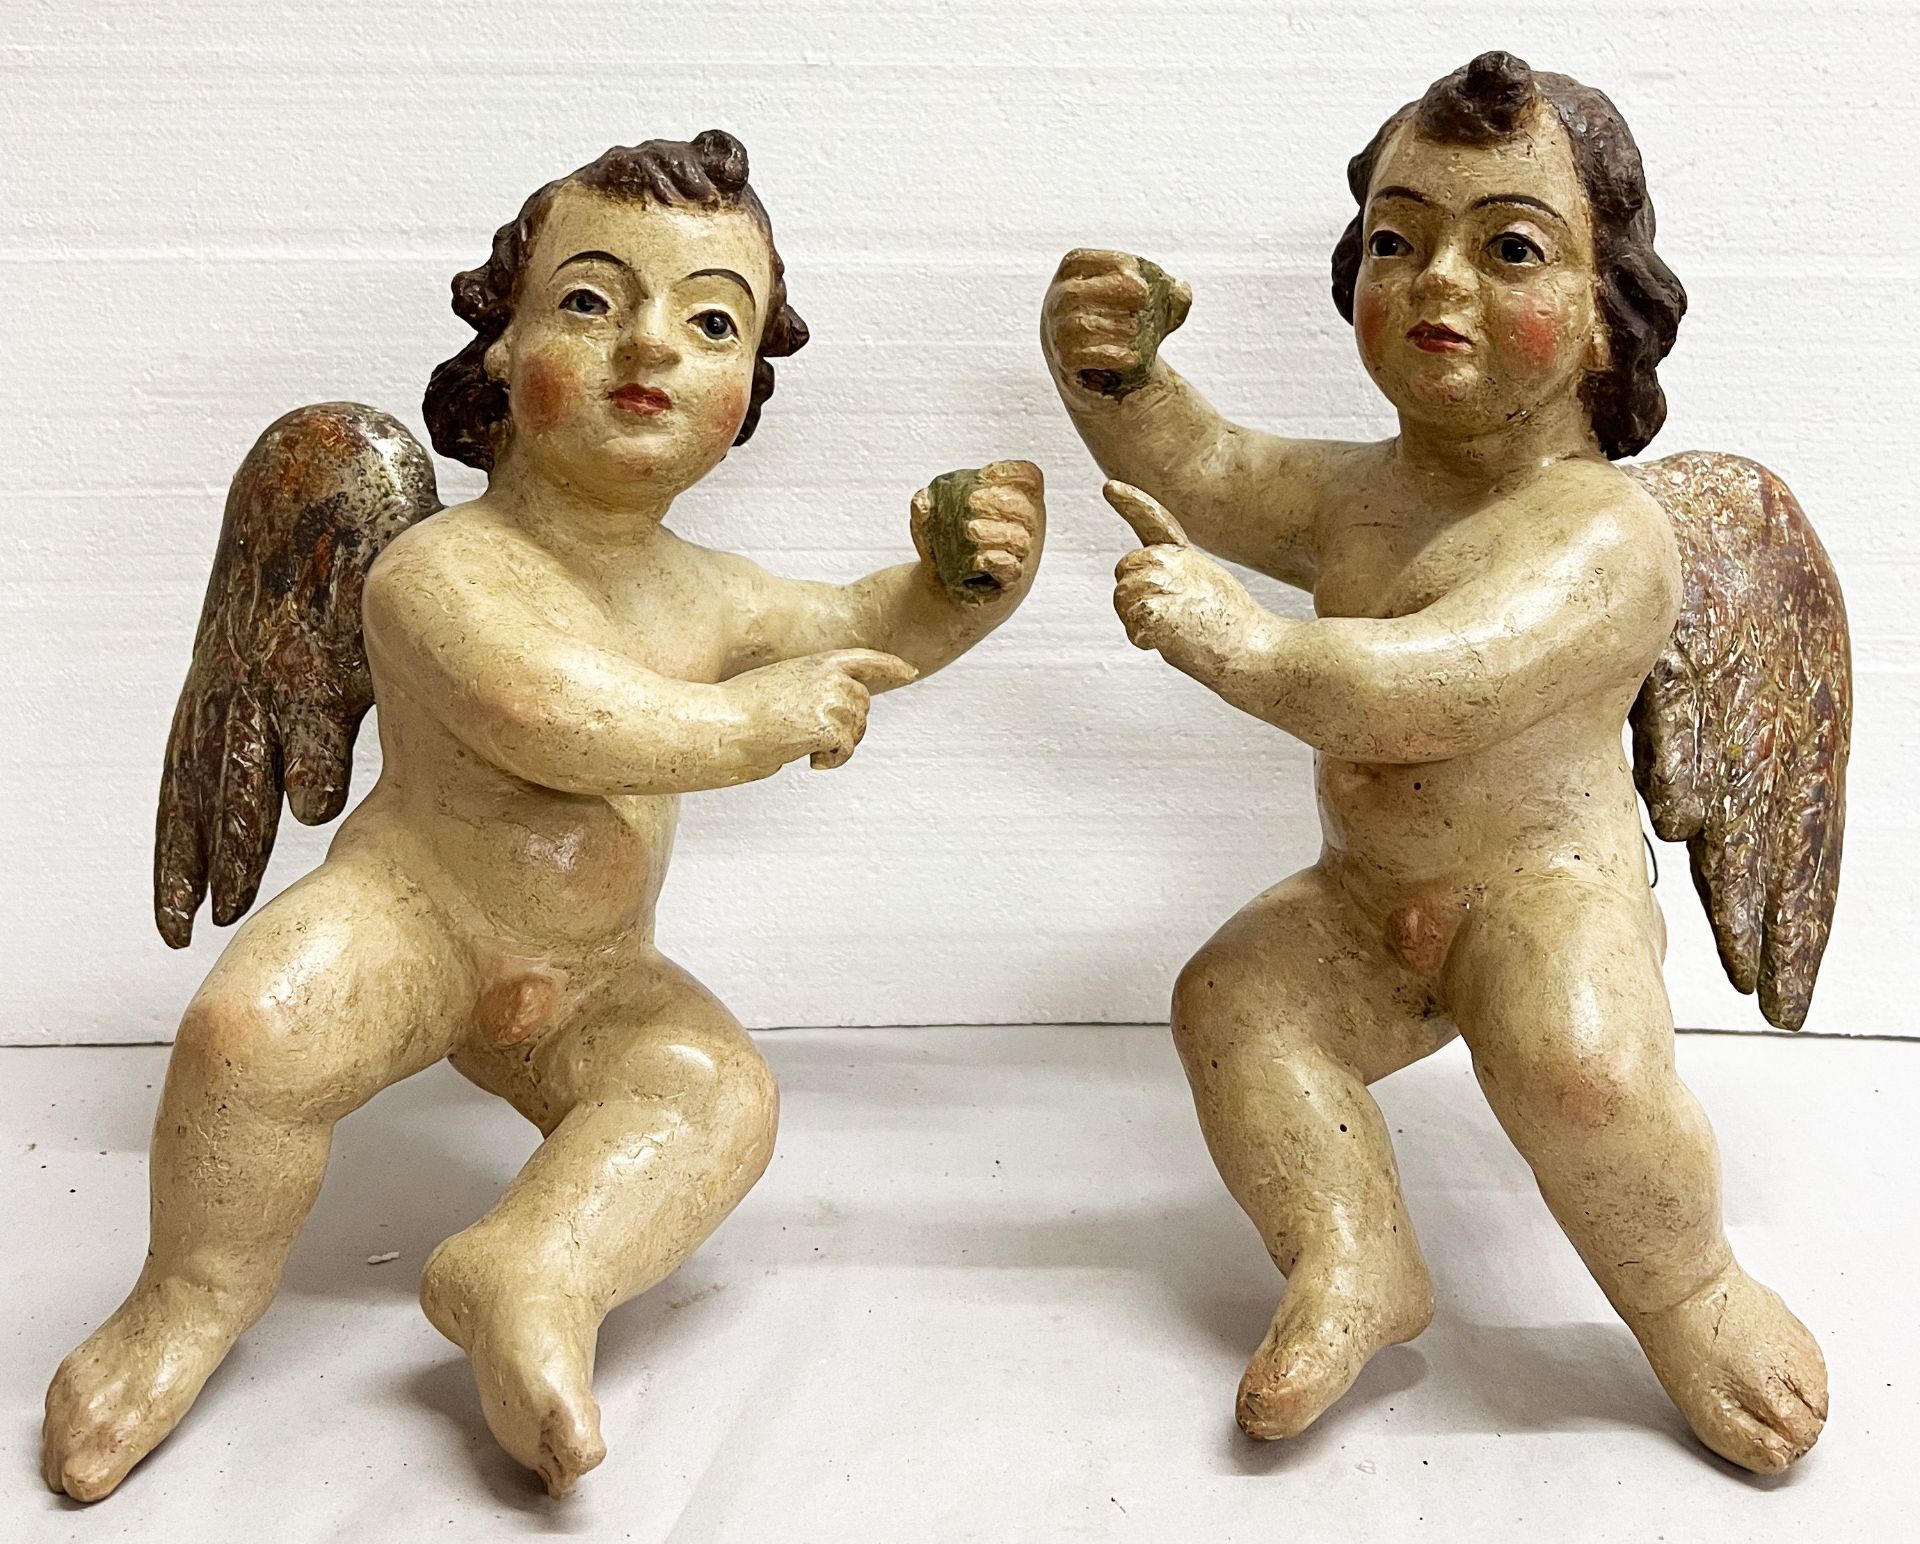 Paar Engel/ Pair of angels. Wohl Neapel, 18. Jh., Holz, farbige Fassung, teils übergangen,